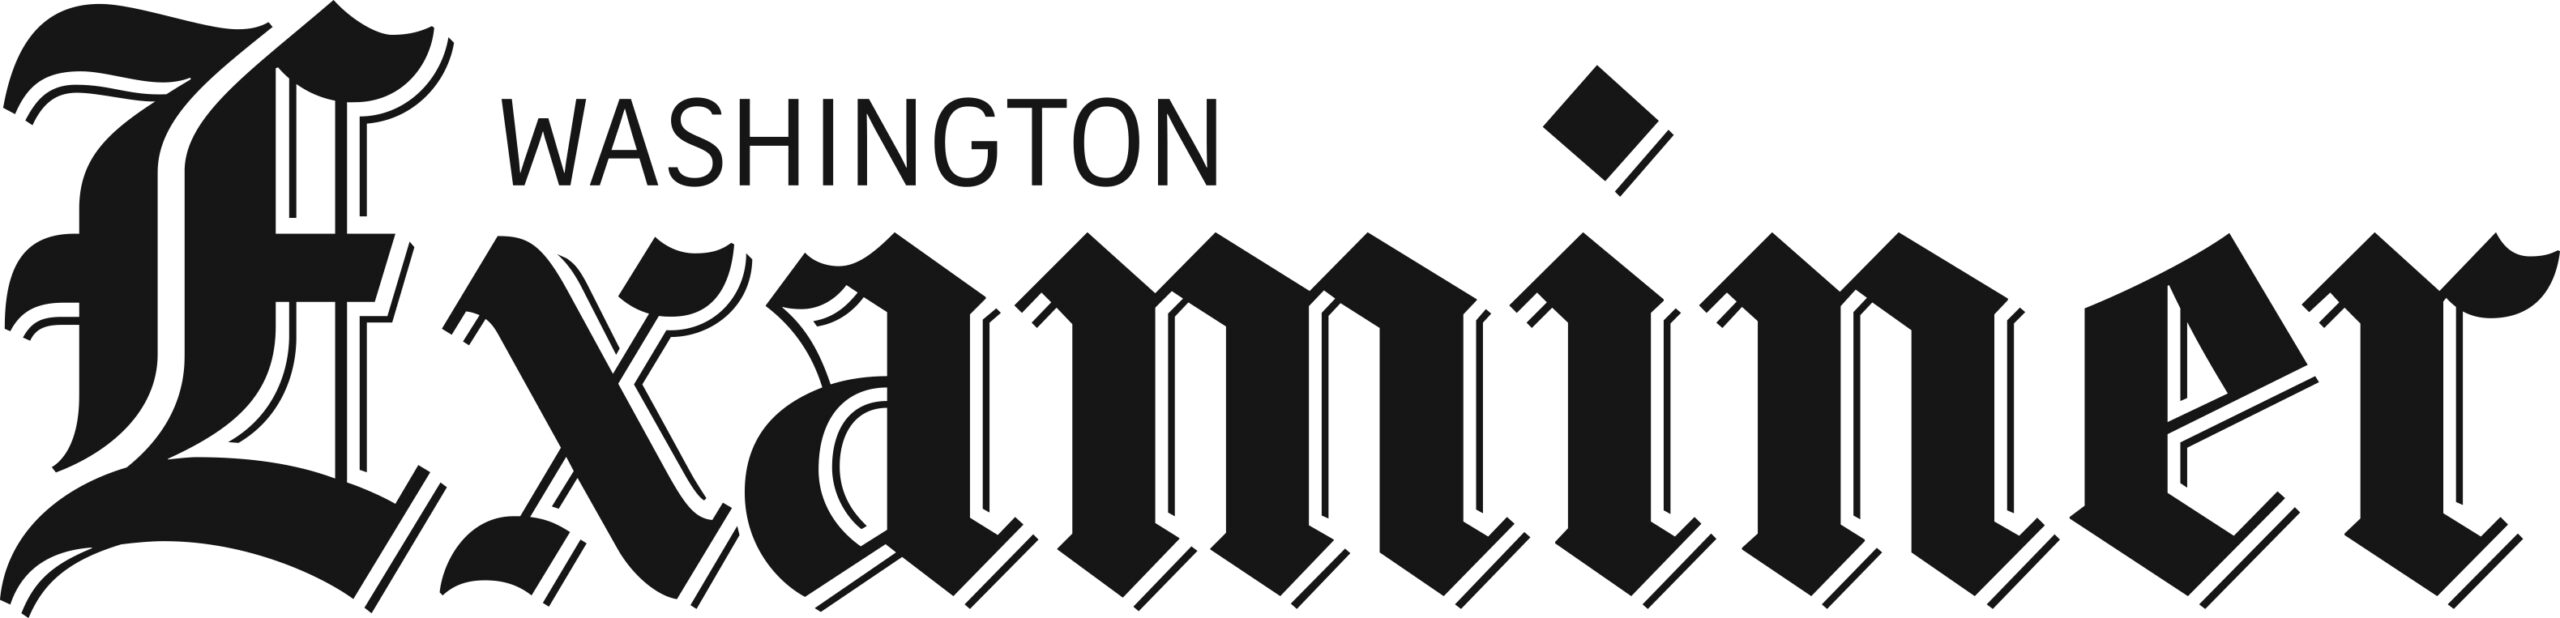 Washington Examiner